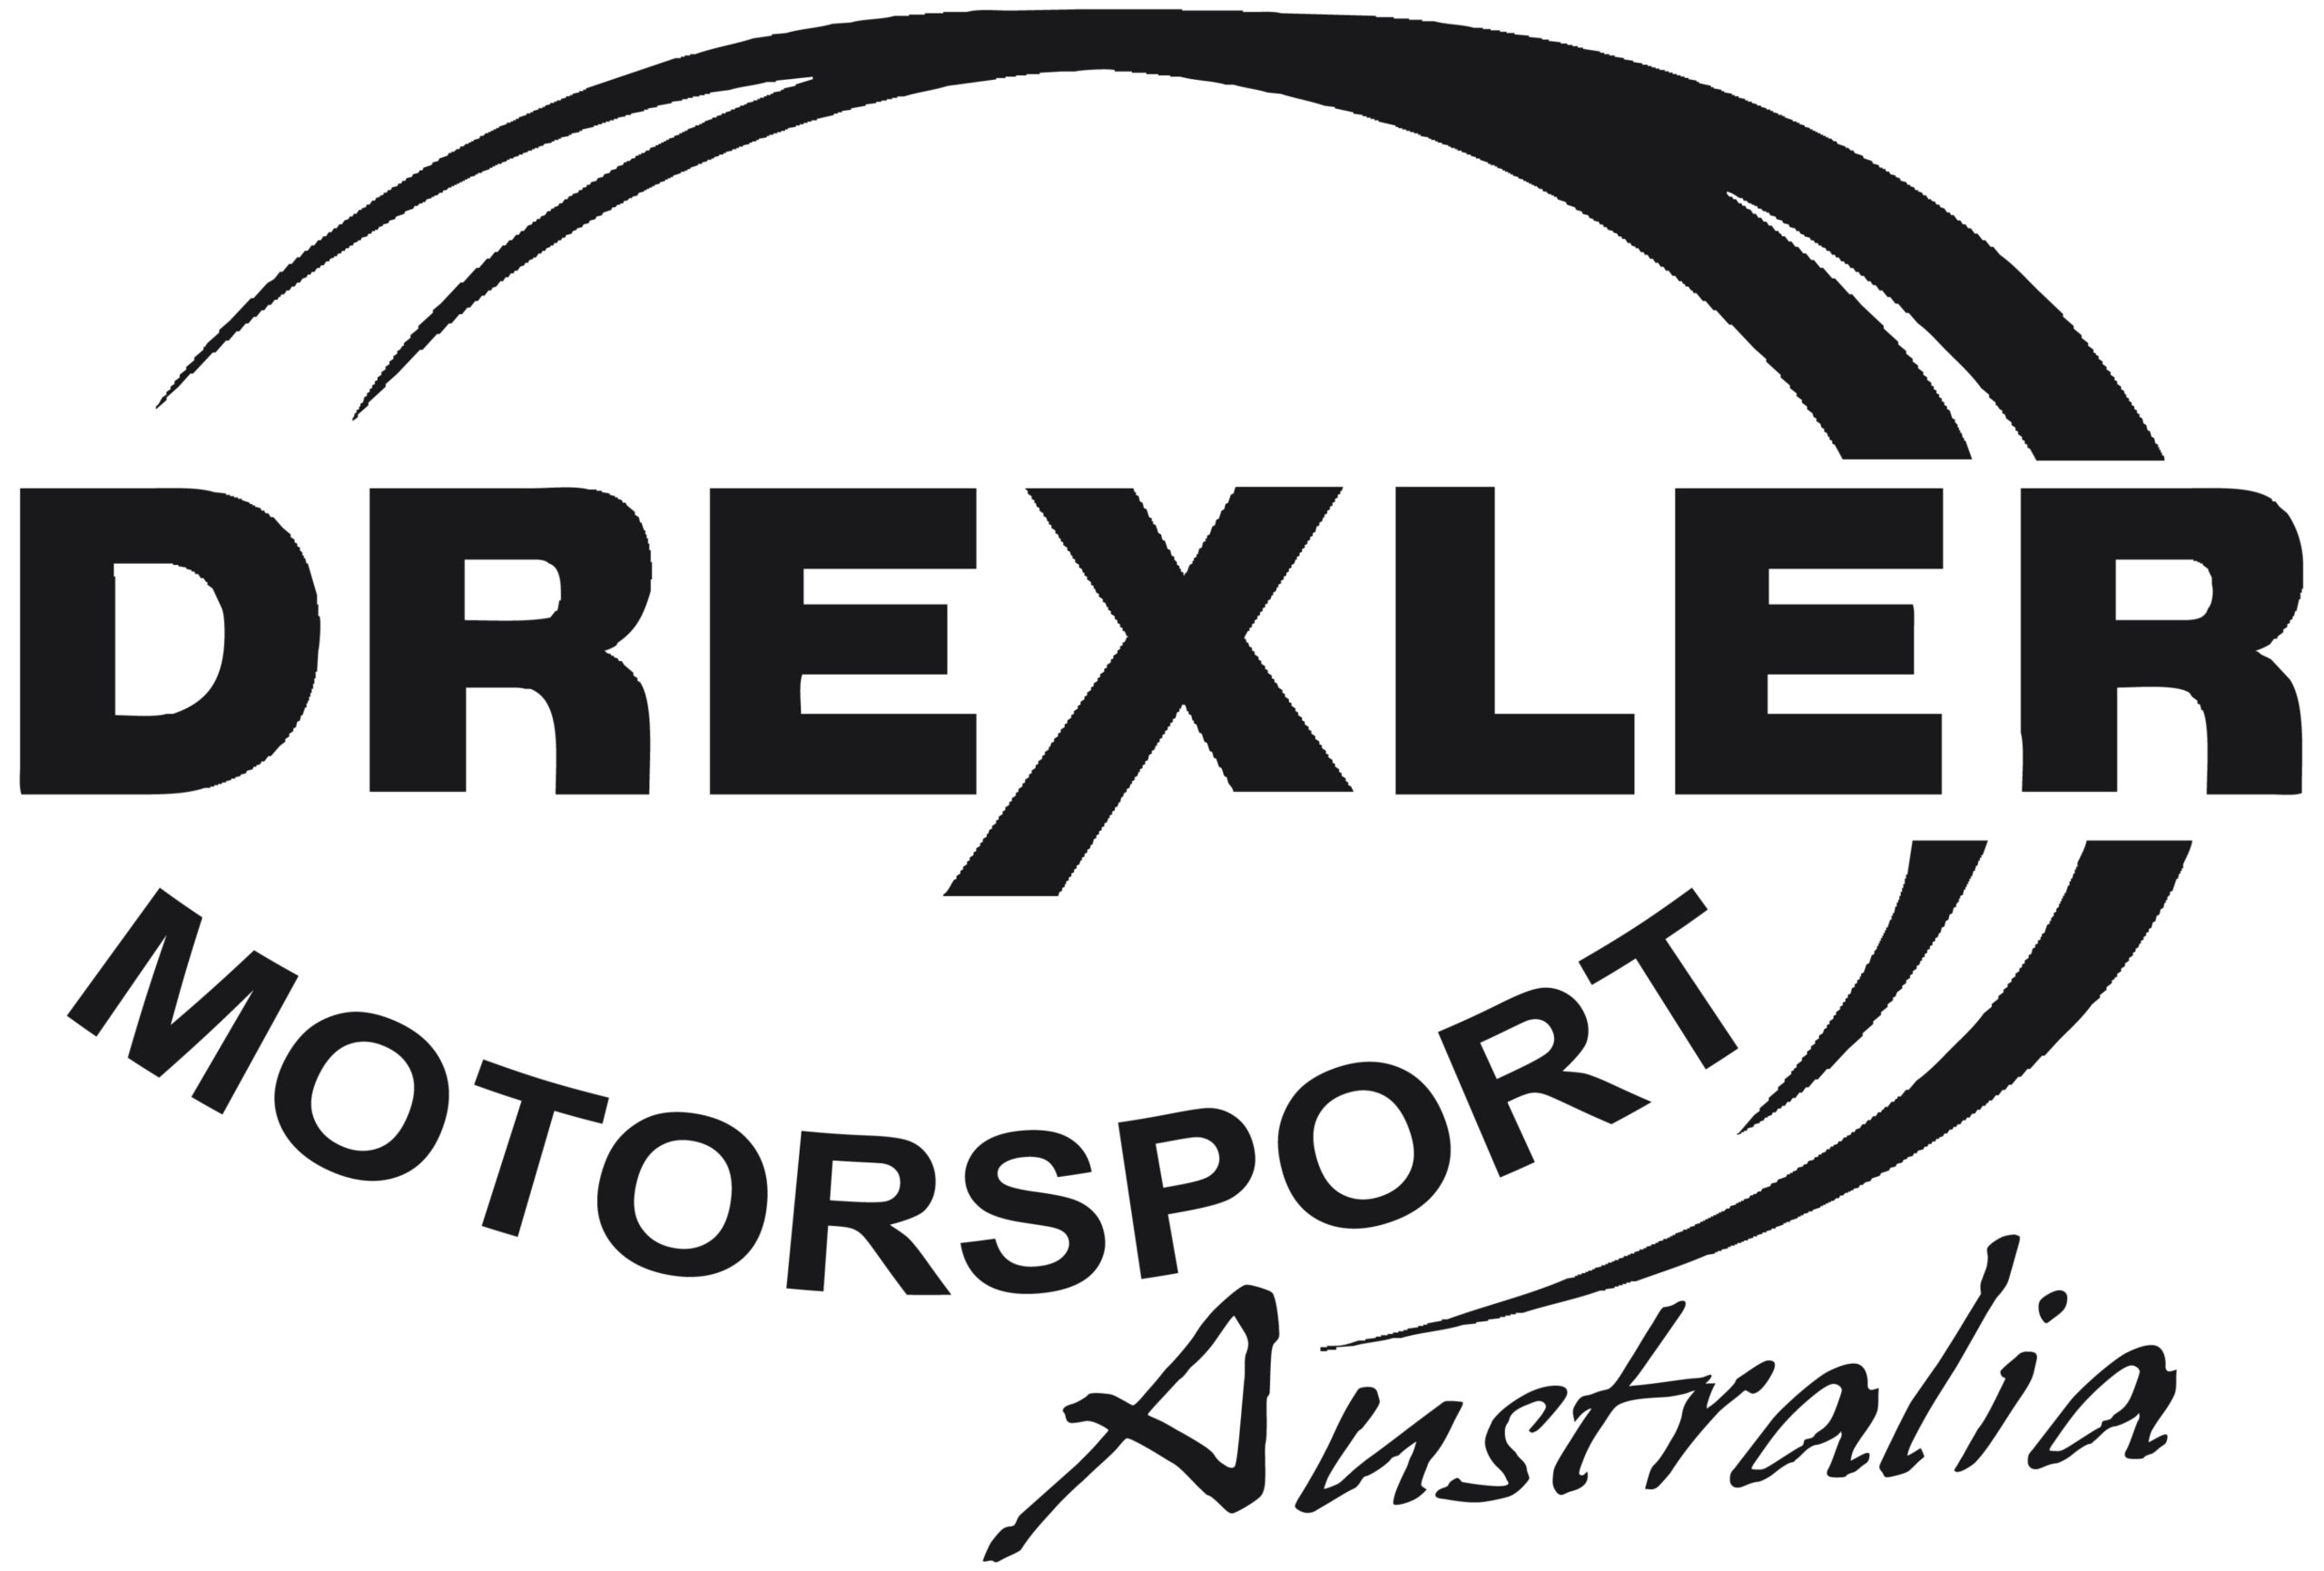 Drexler Motorsport Australia